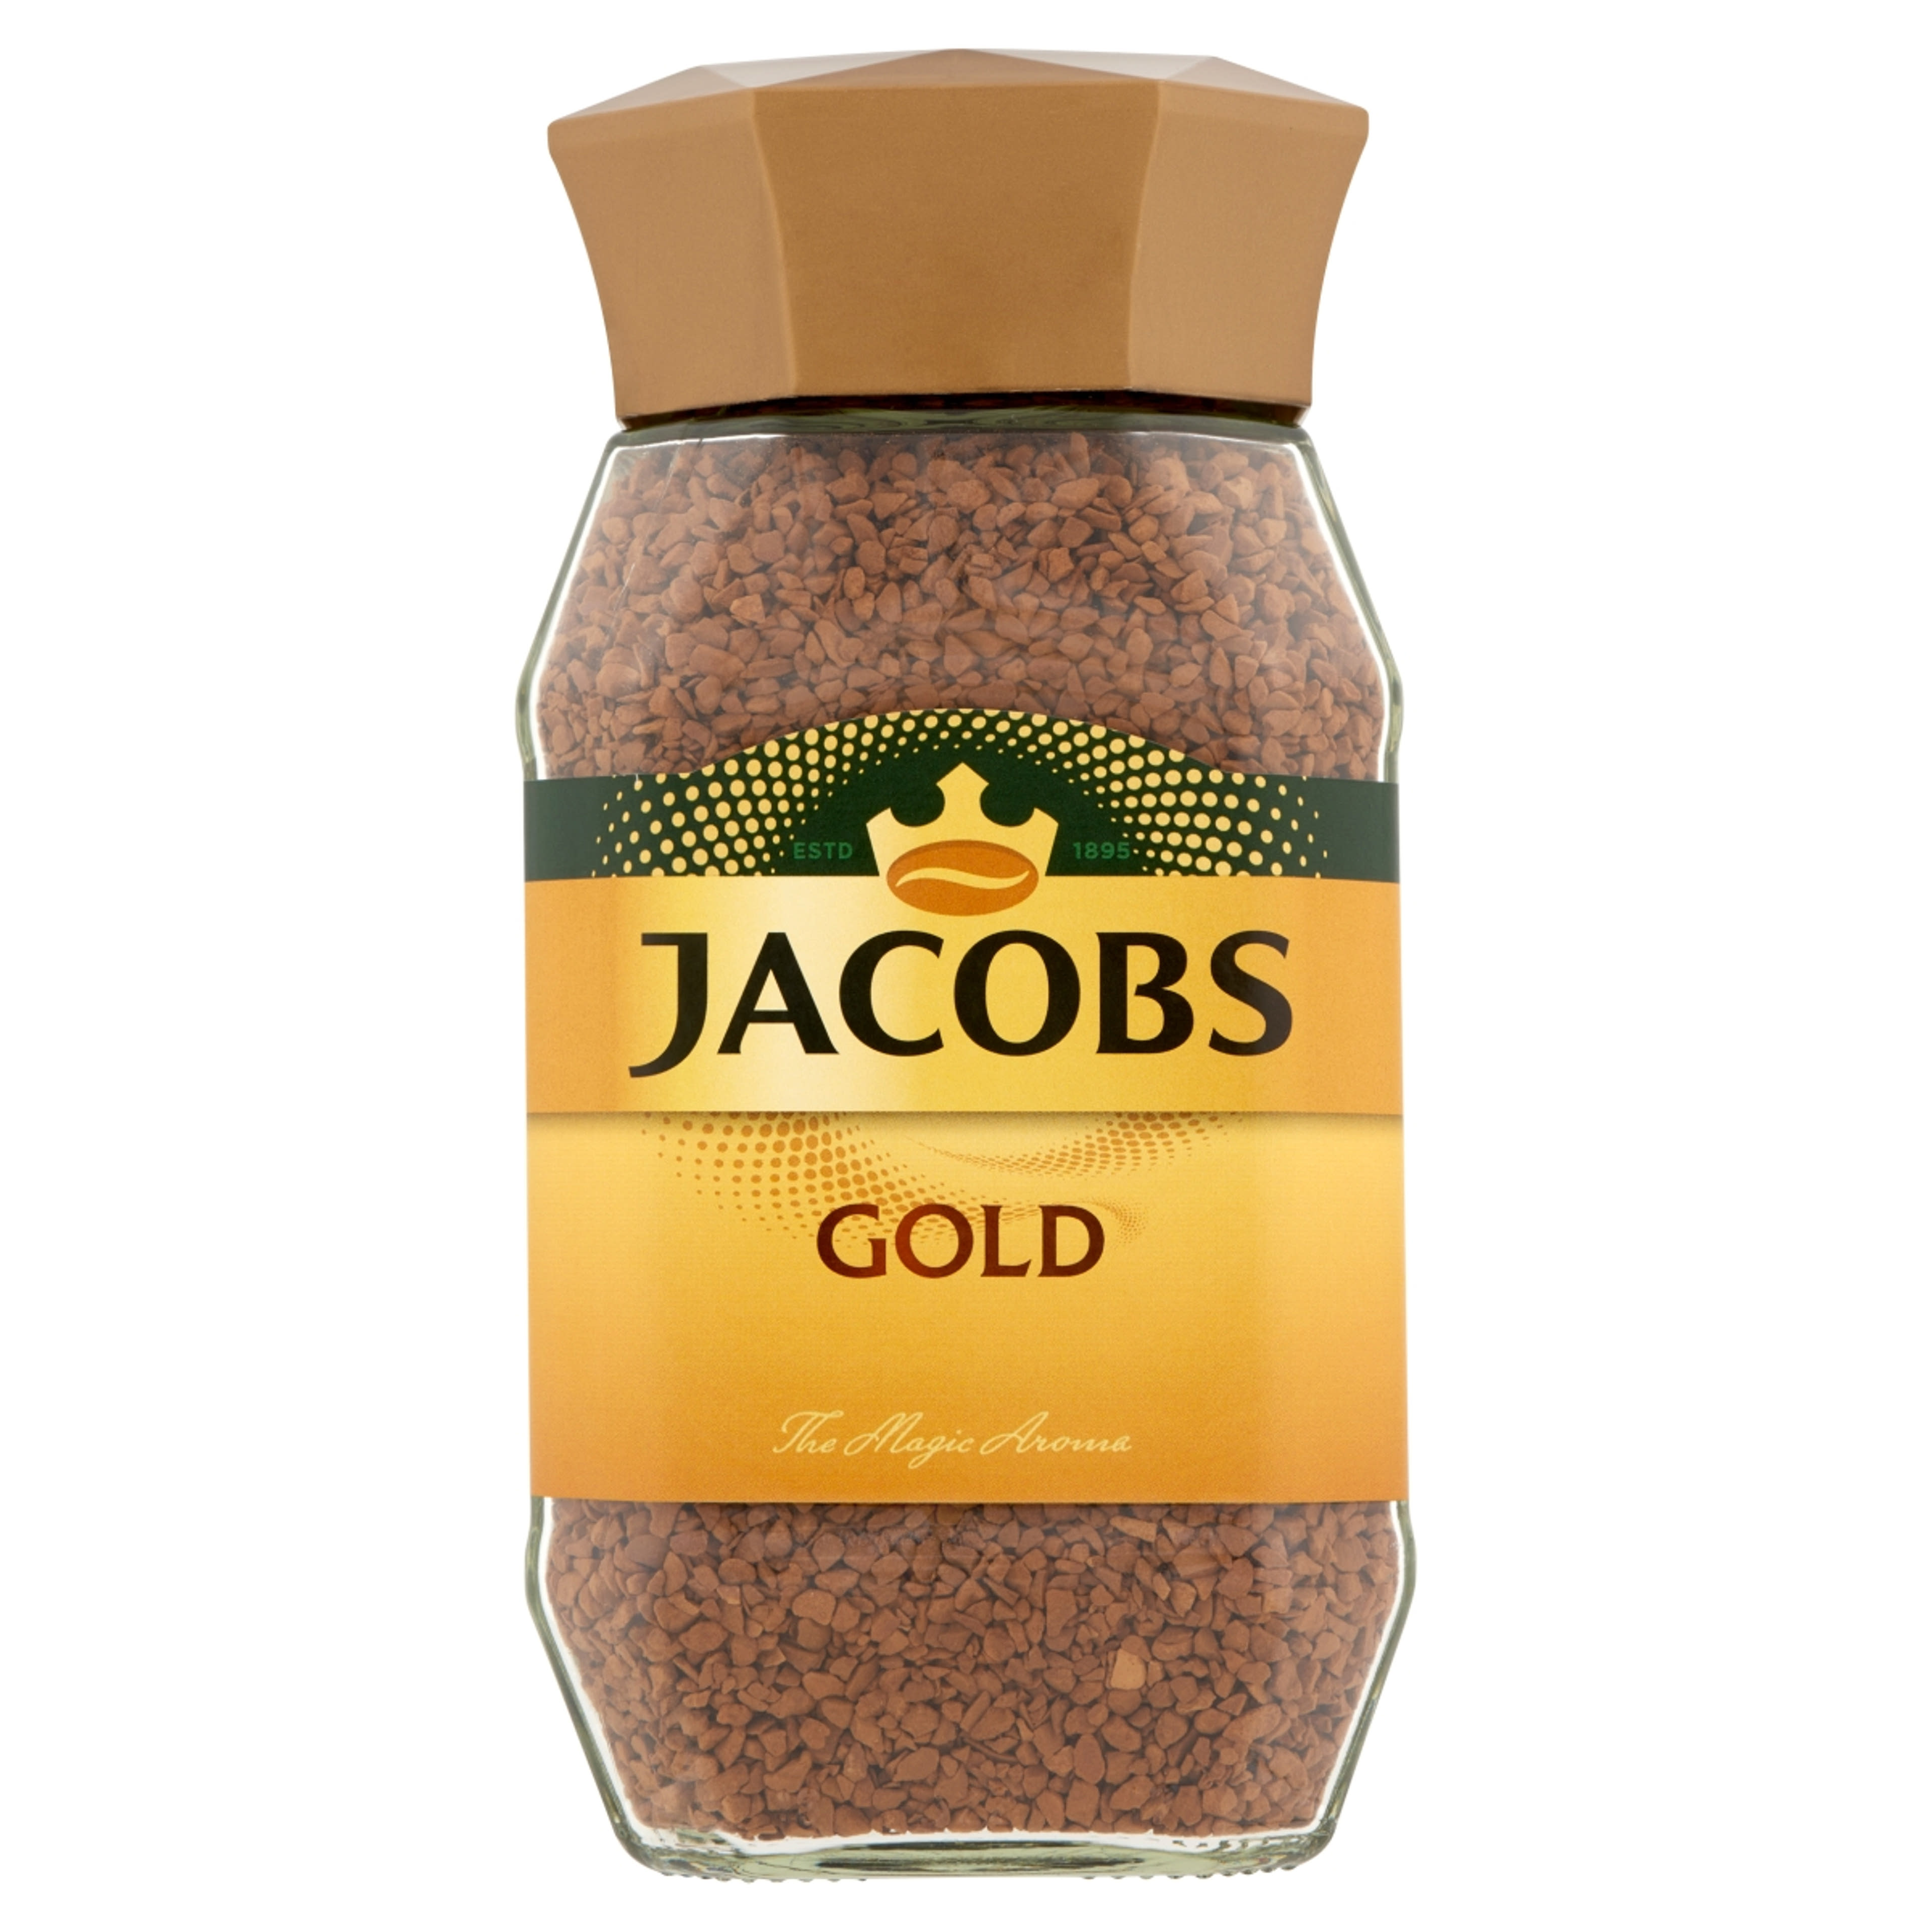 Jacobs Gold üveges instant kávé - 200 g